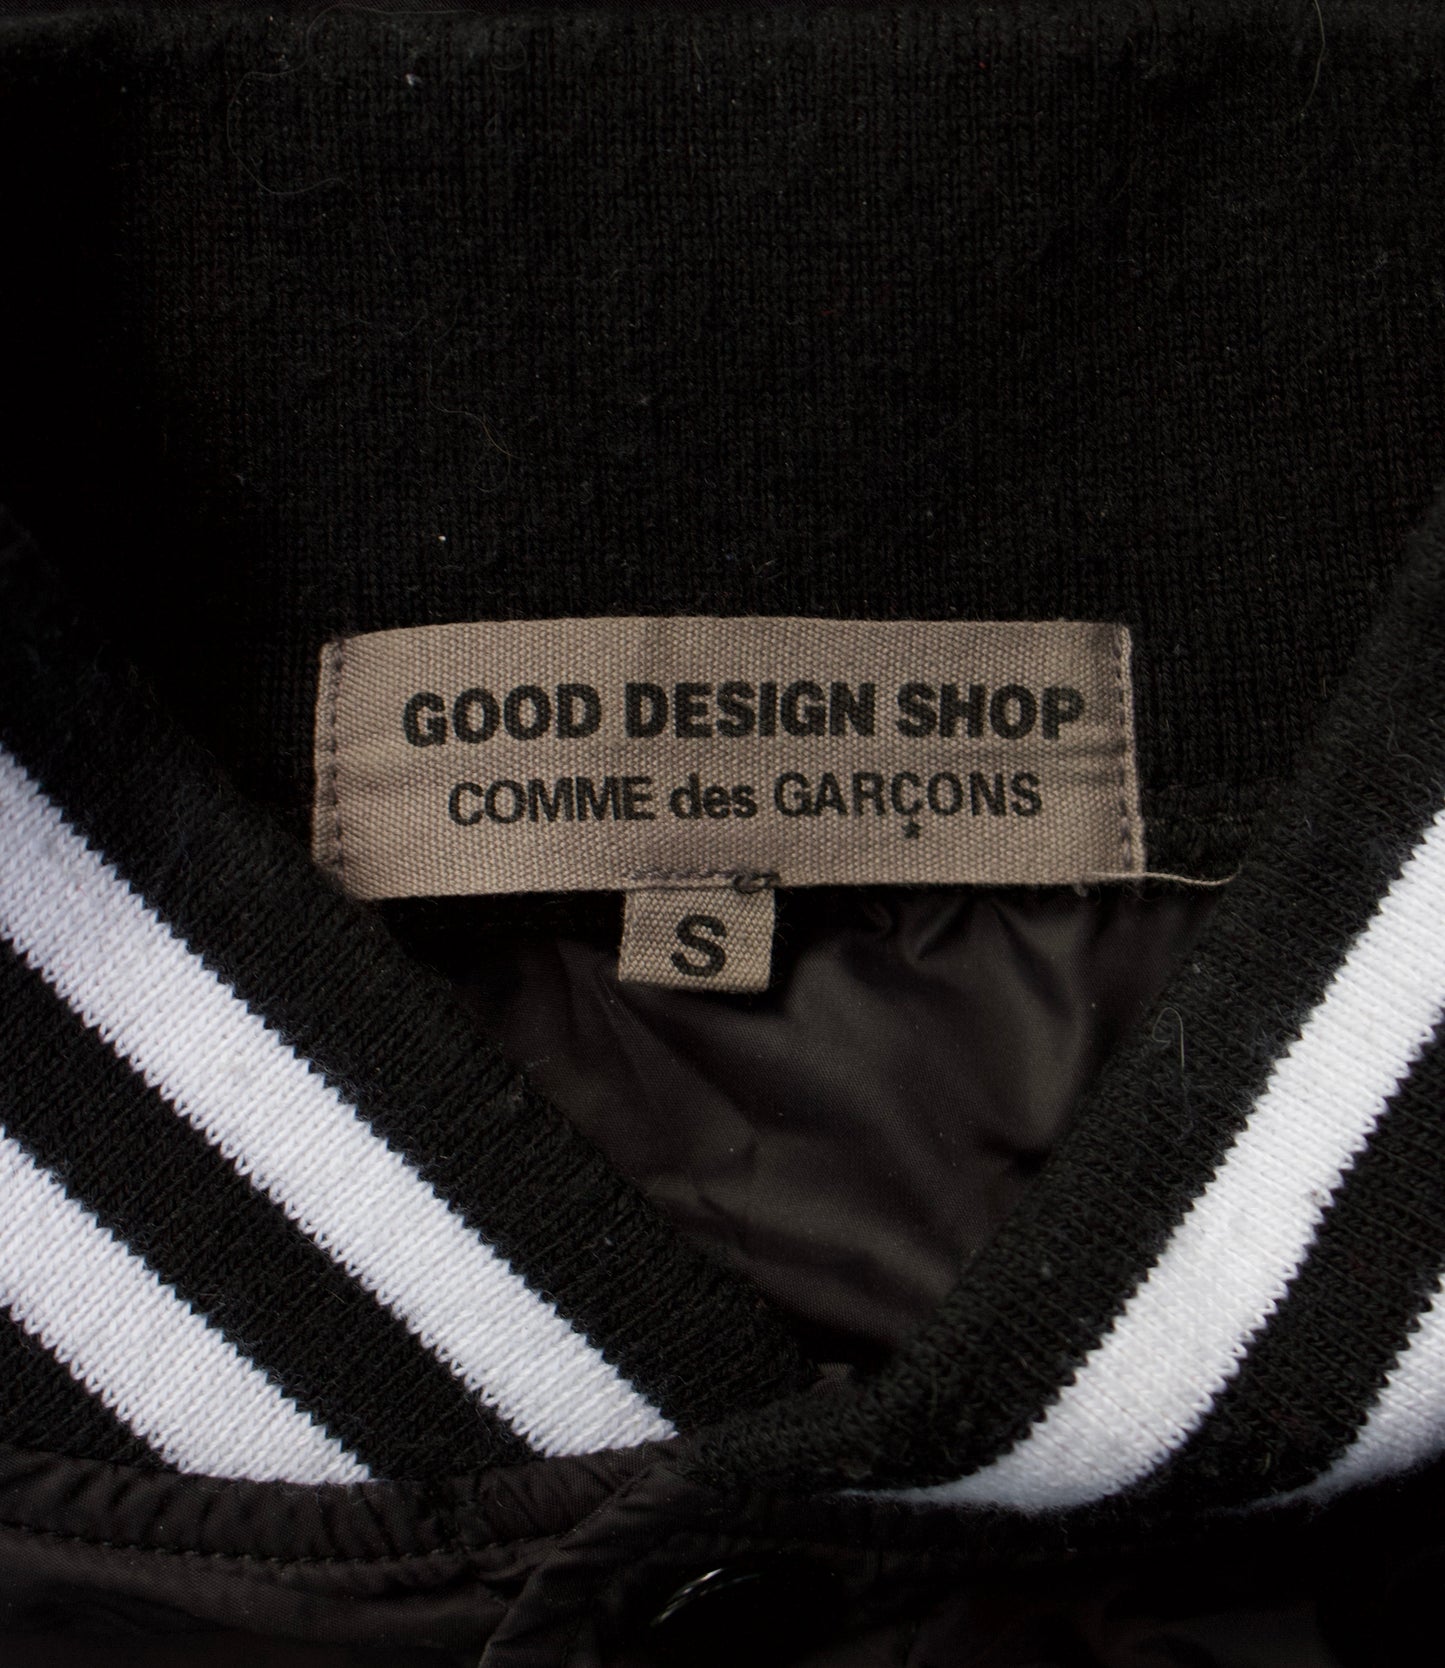 COMME des GARÇONS GOOD DESIGN SHOP Cracked Logo Coach Jacket